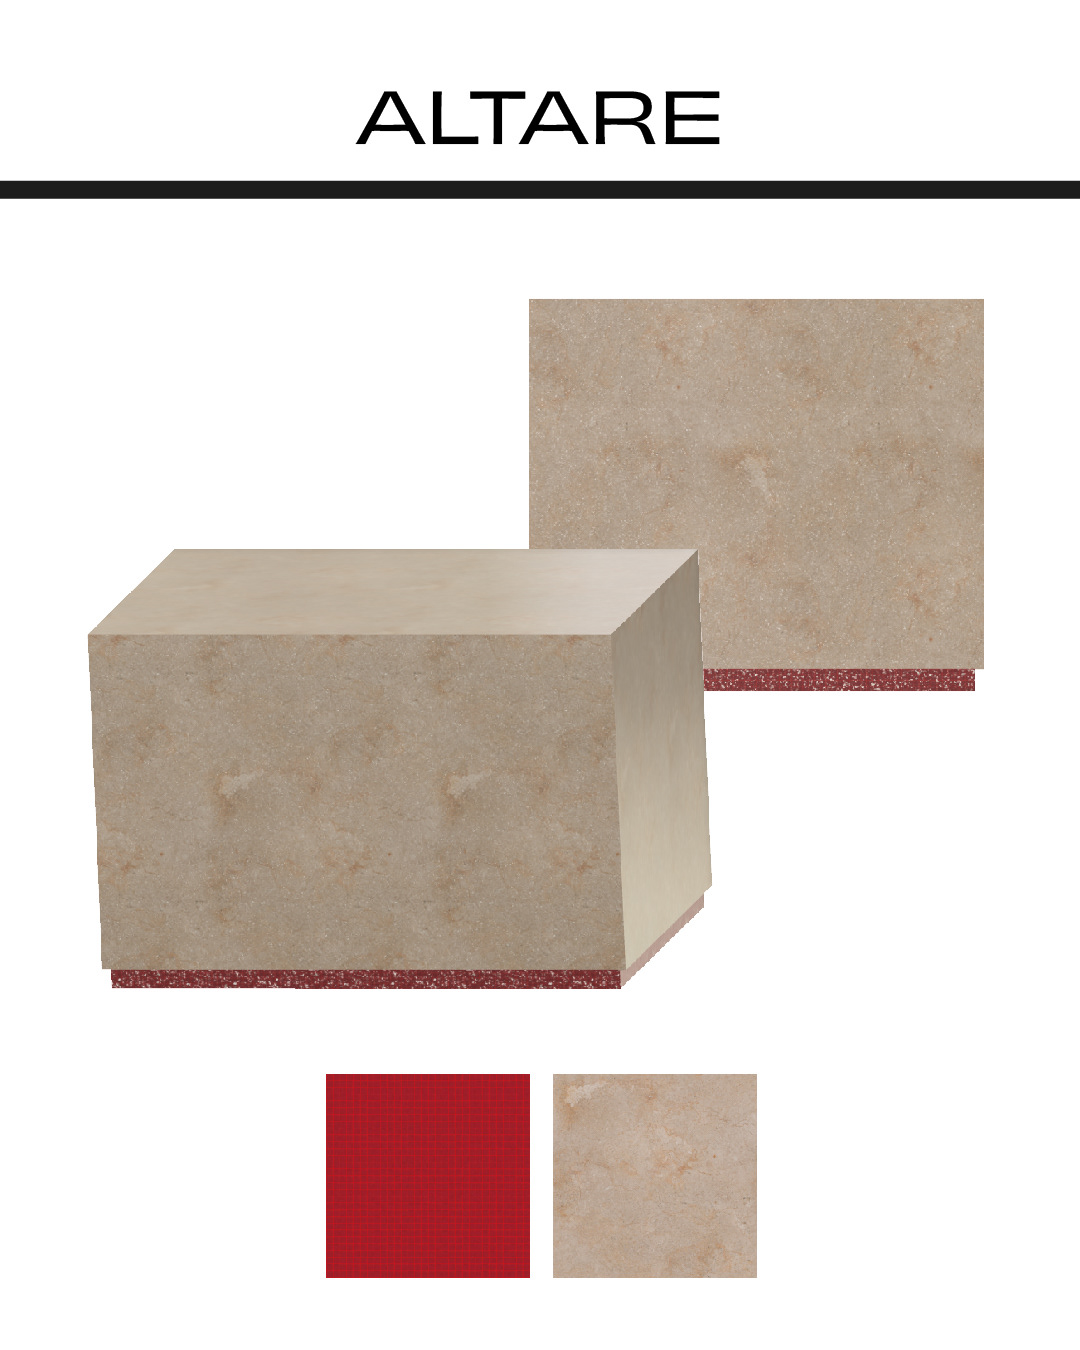 Image may contain: building material, brick and box